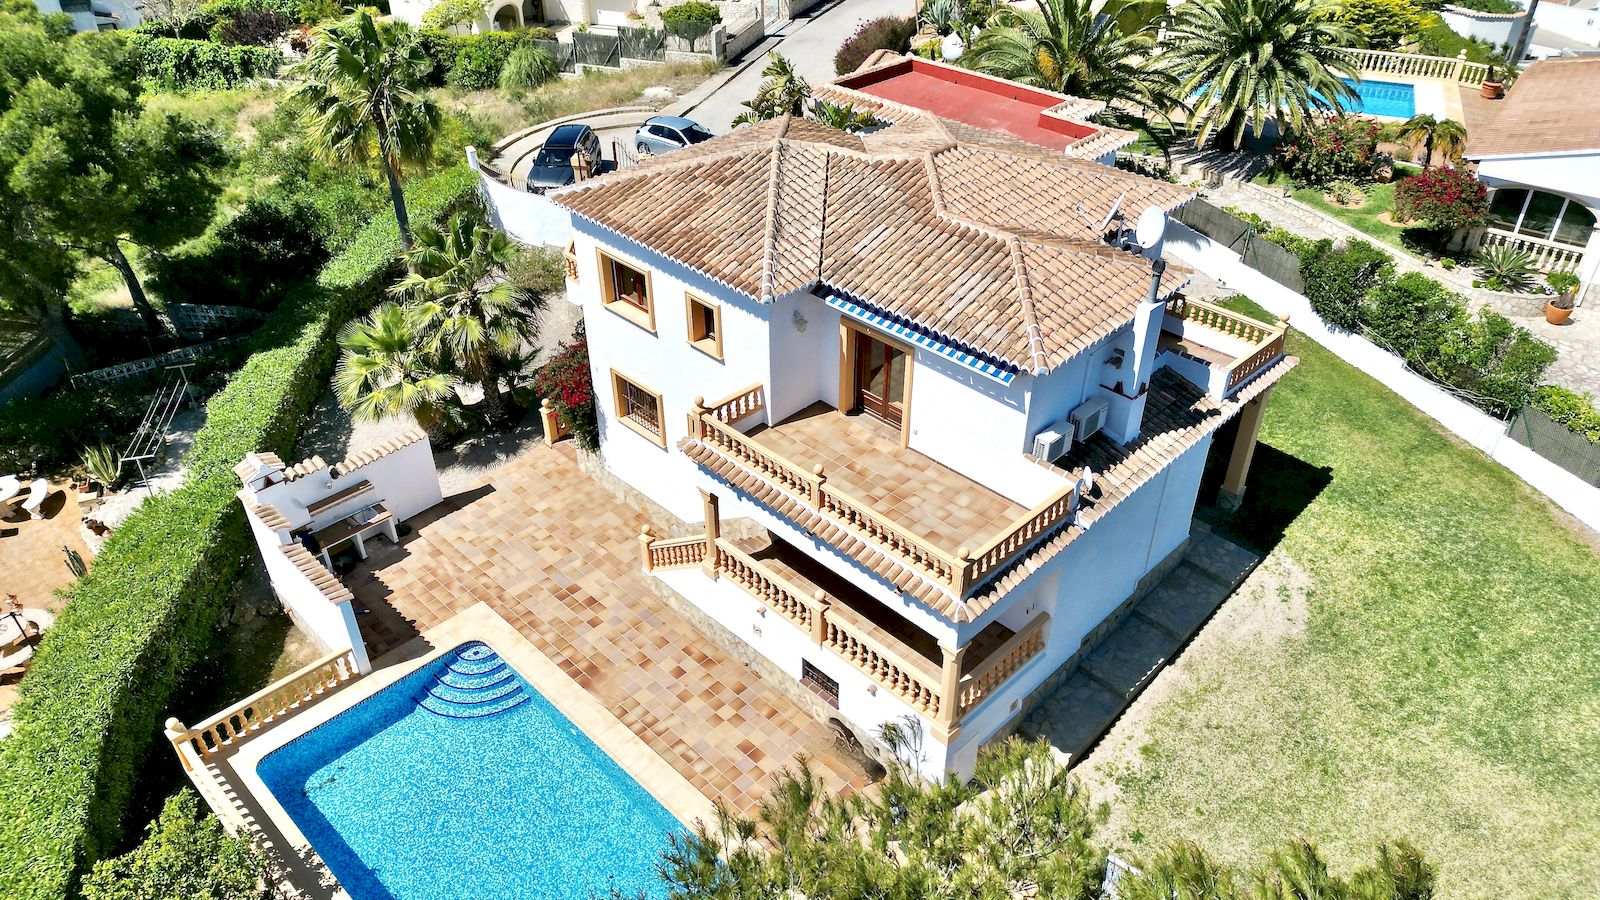 Villa zu verkaufen mit Meerblick in Balcon al Mar - Javea